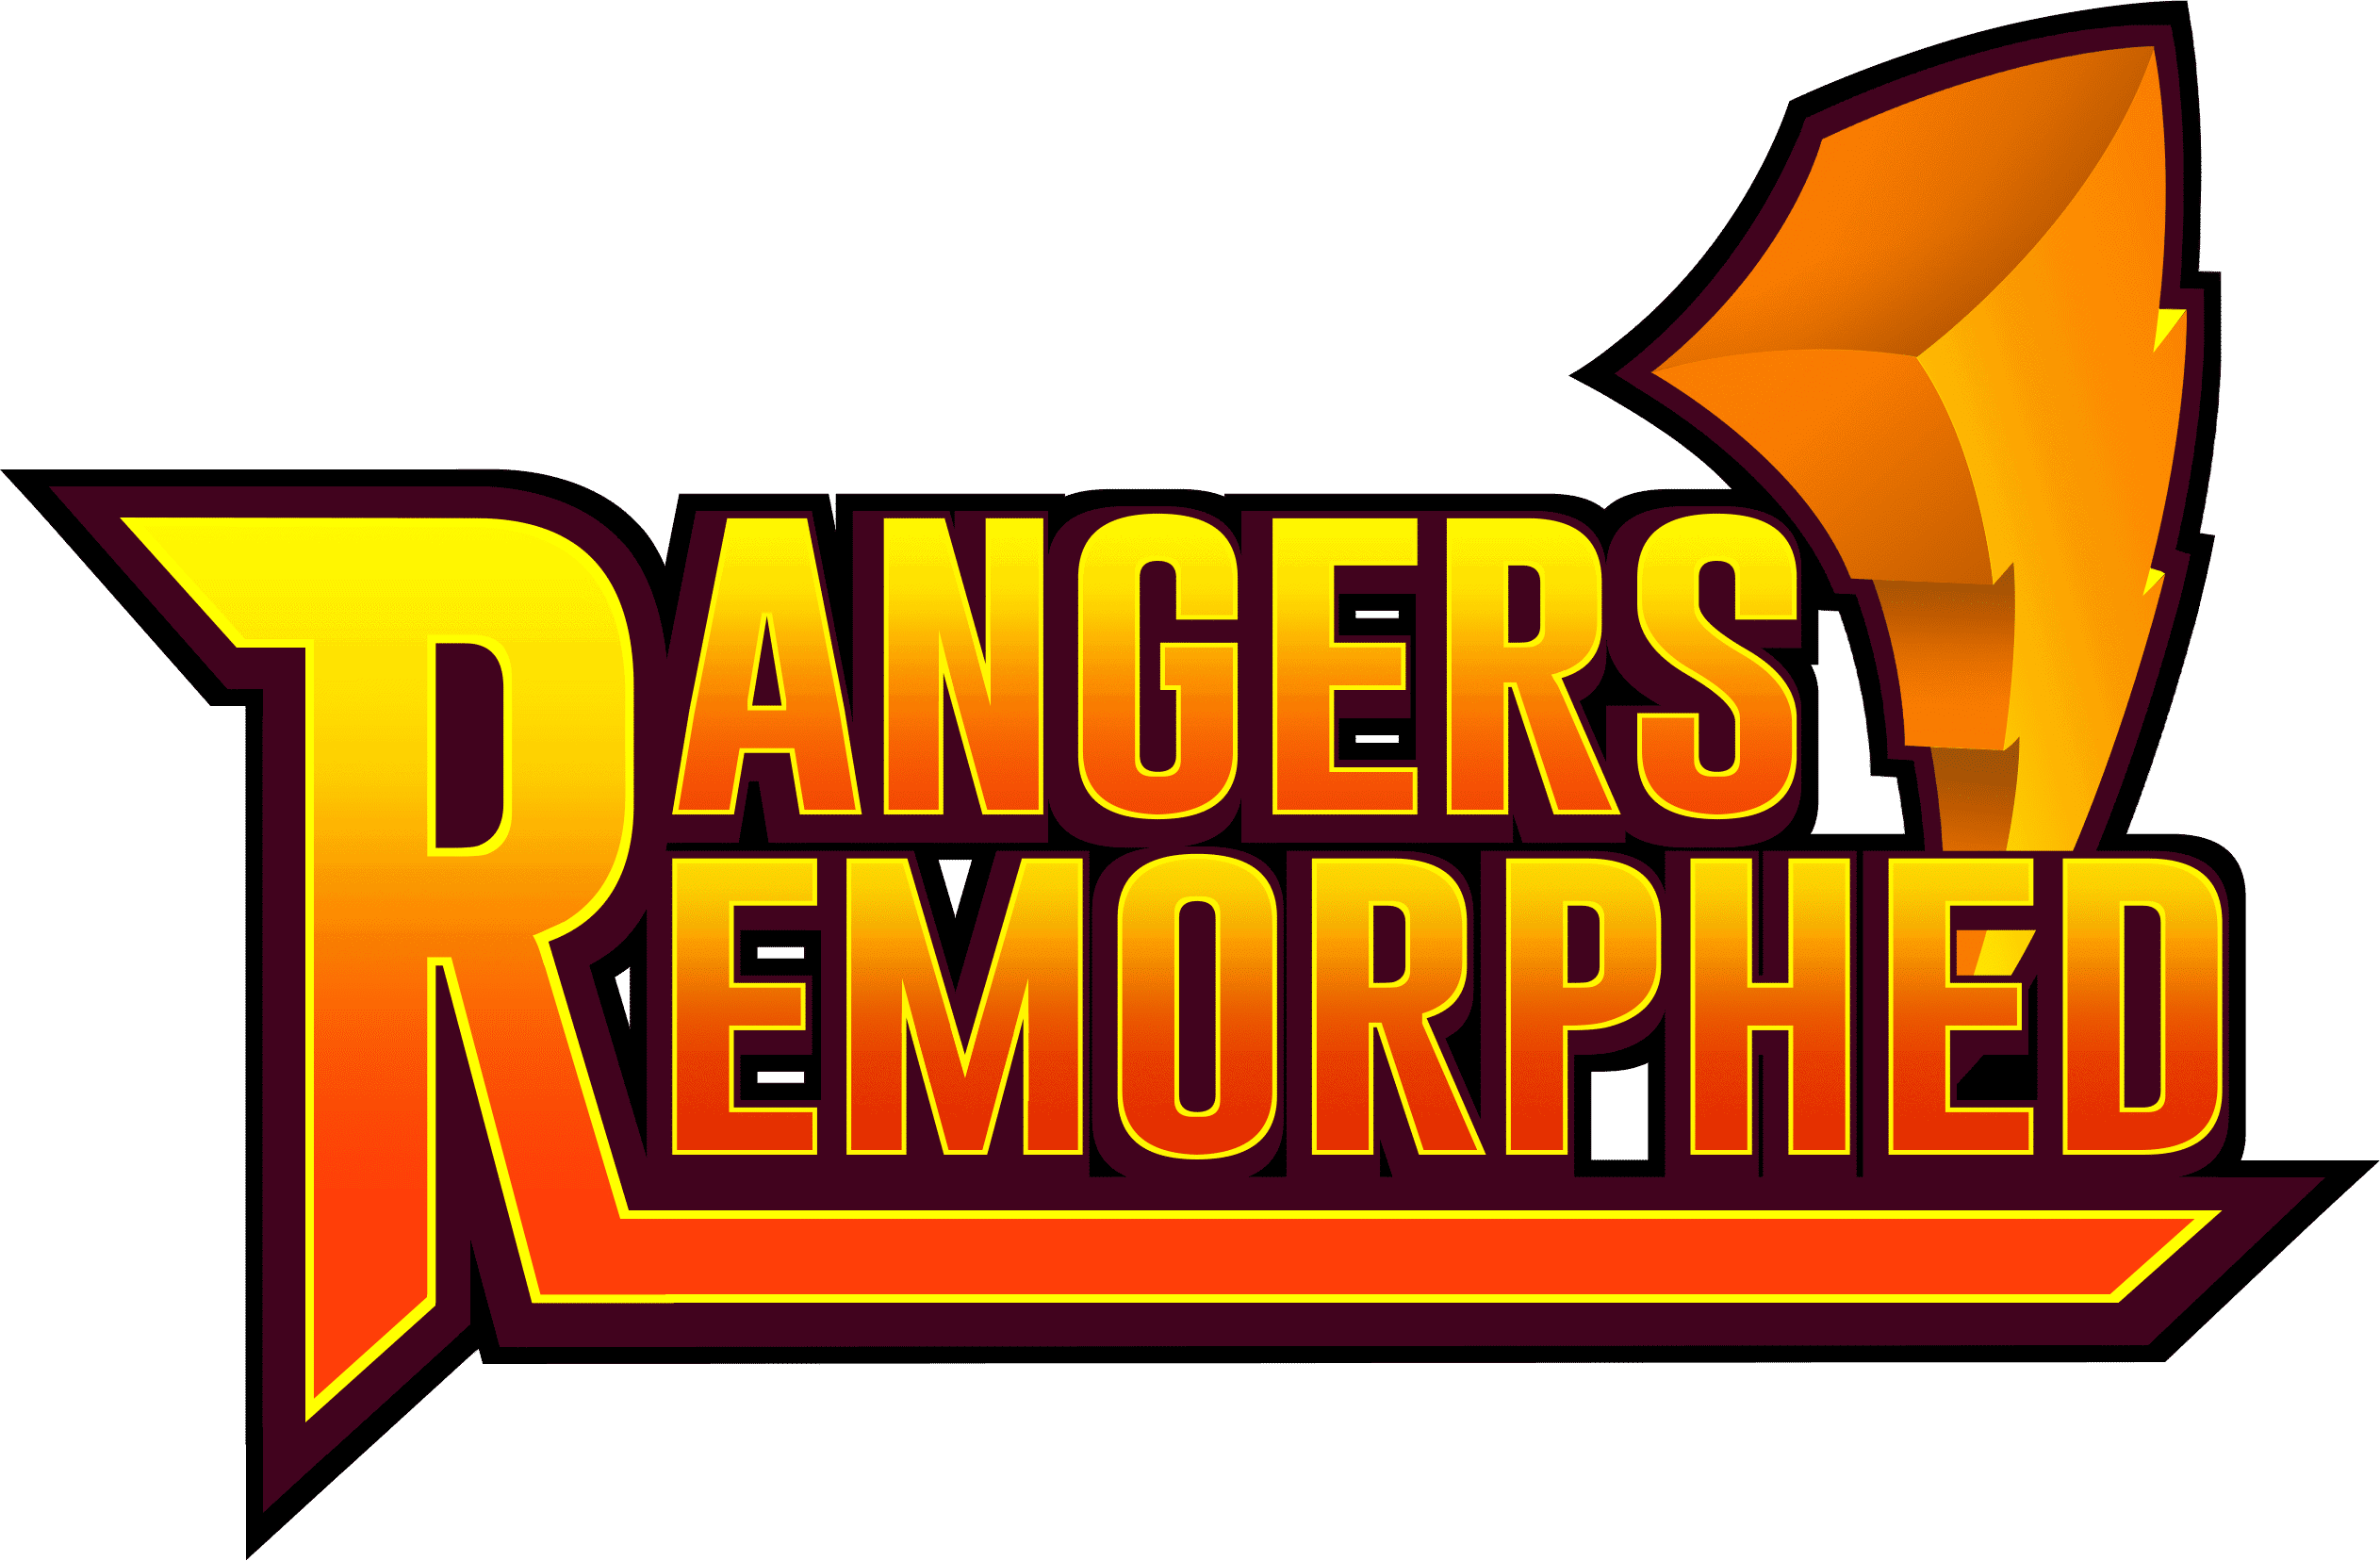 mighty morphin power rangers logo vector